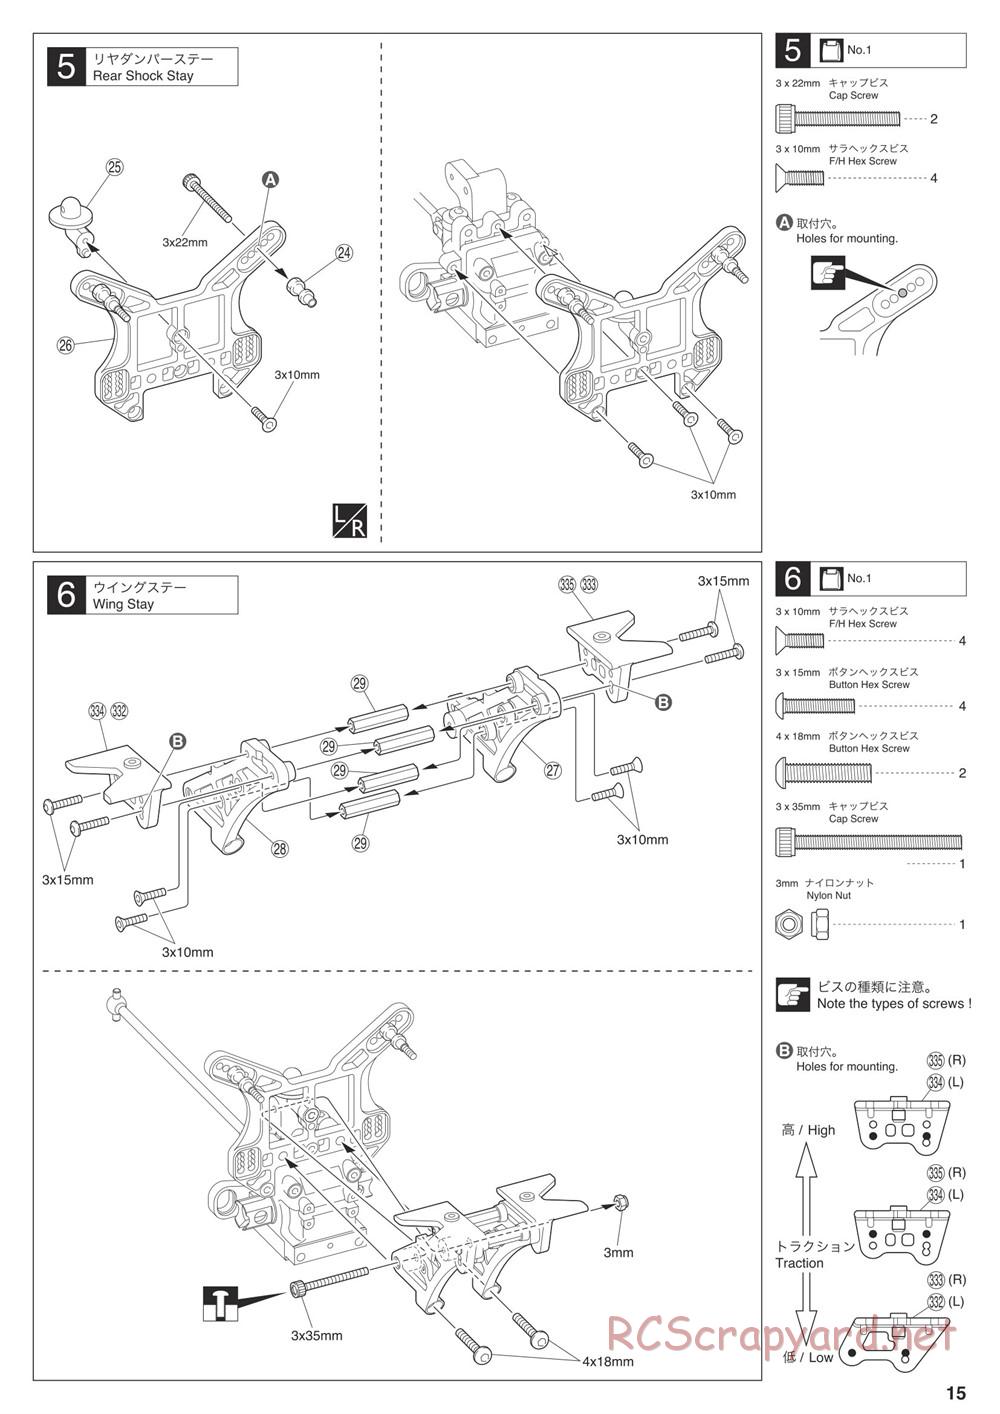 Kyosho - Inferno MP9e Evo - Manual - Page 15